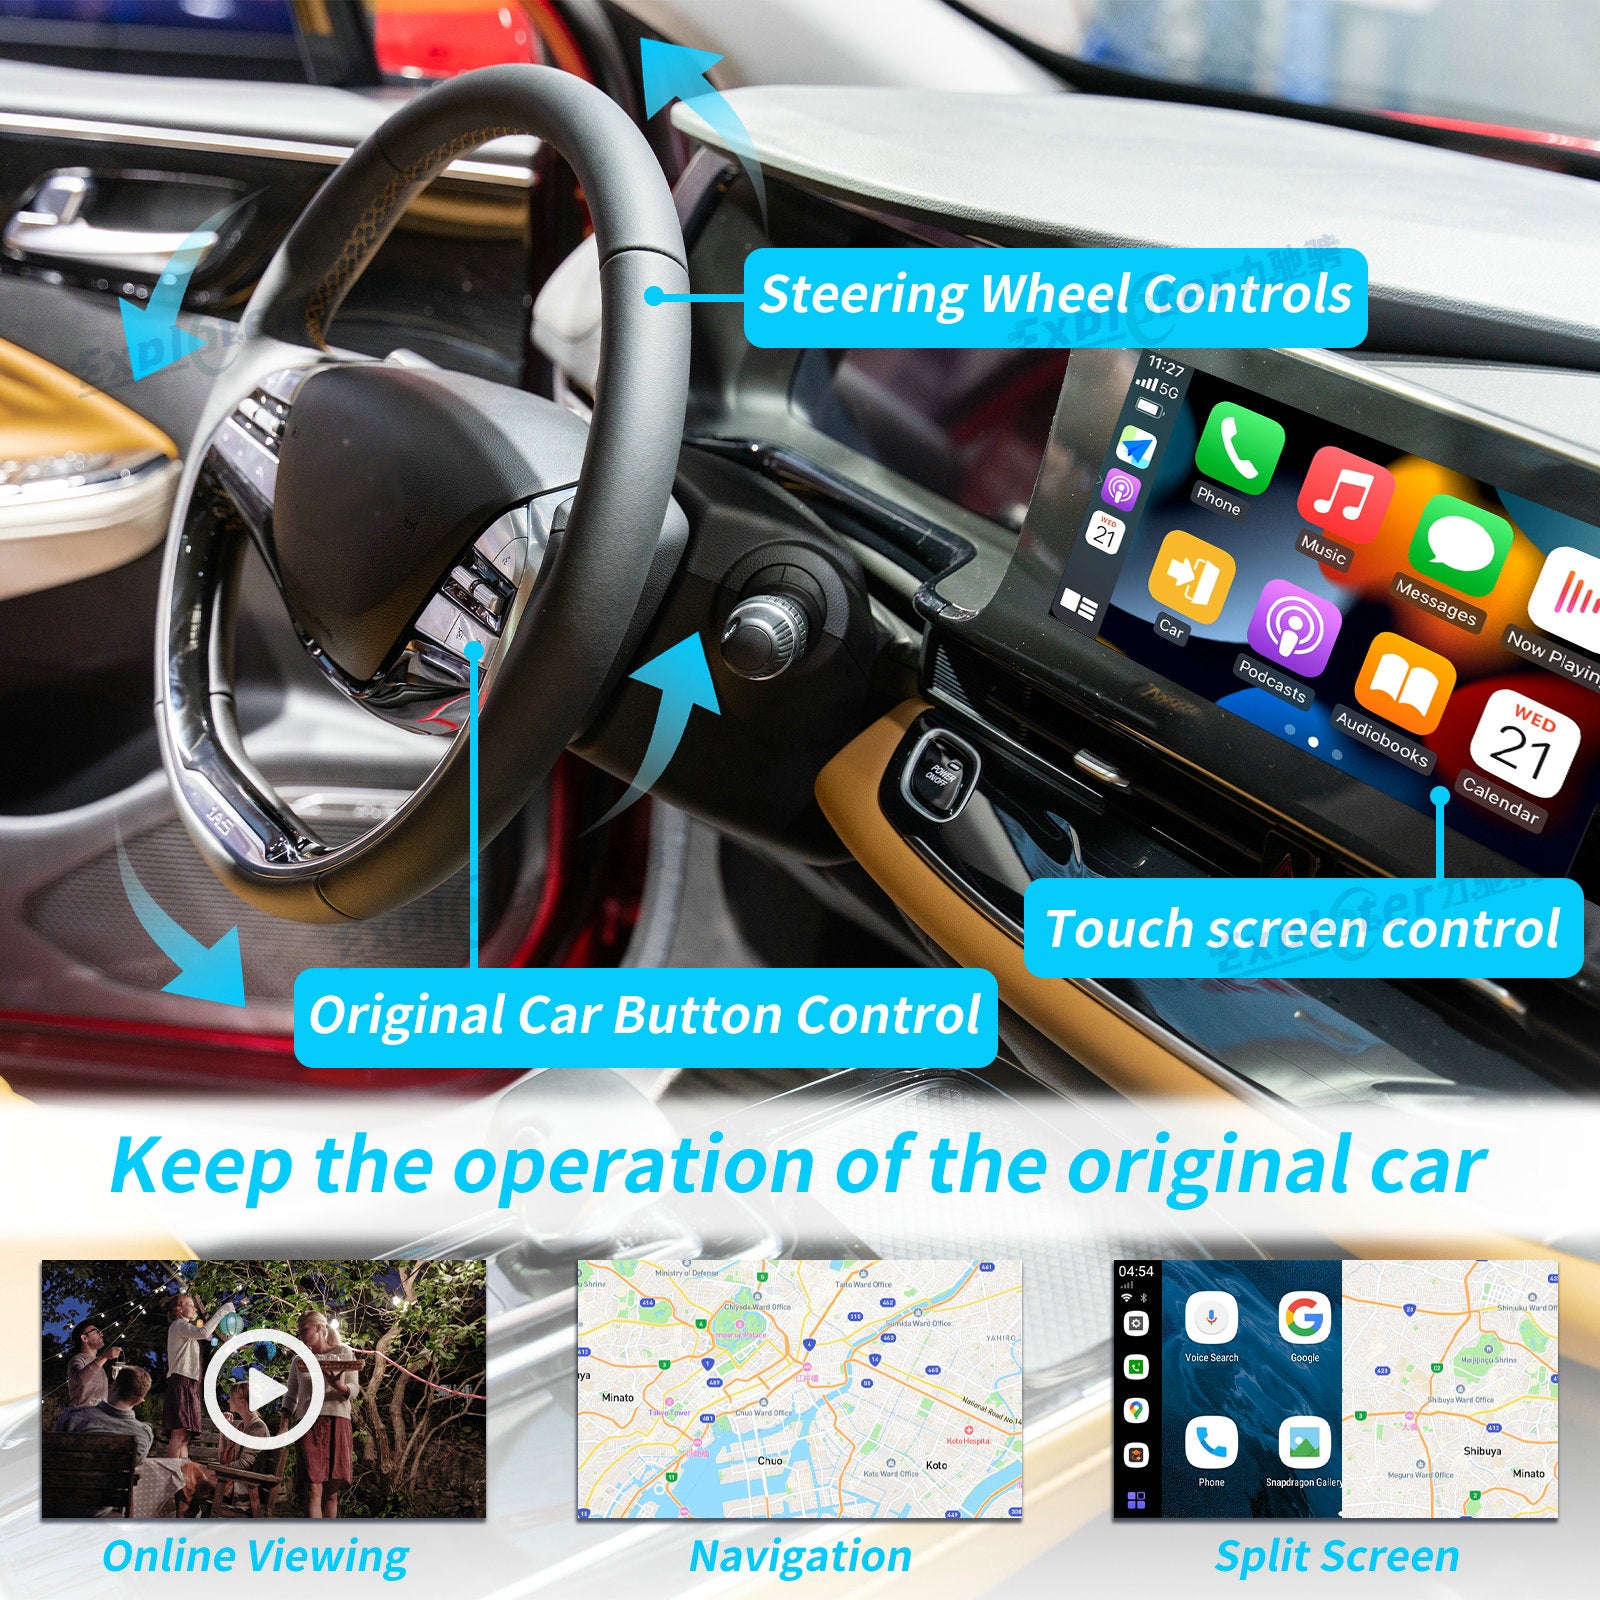 EXPLOTER AI-996 Mini 2.0 ApplePie - Car Wireless CarPlay AI Box